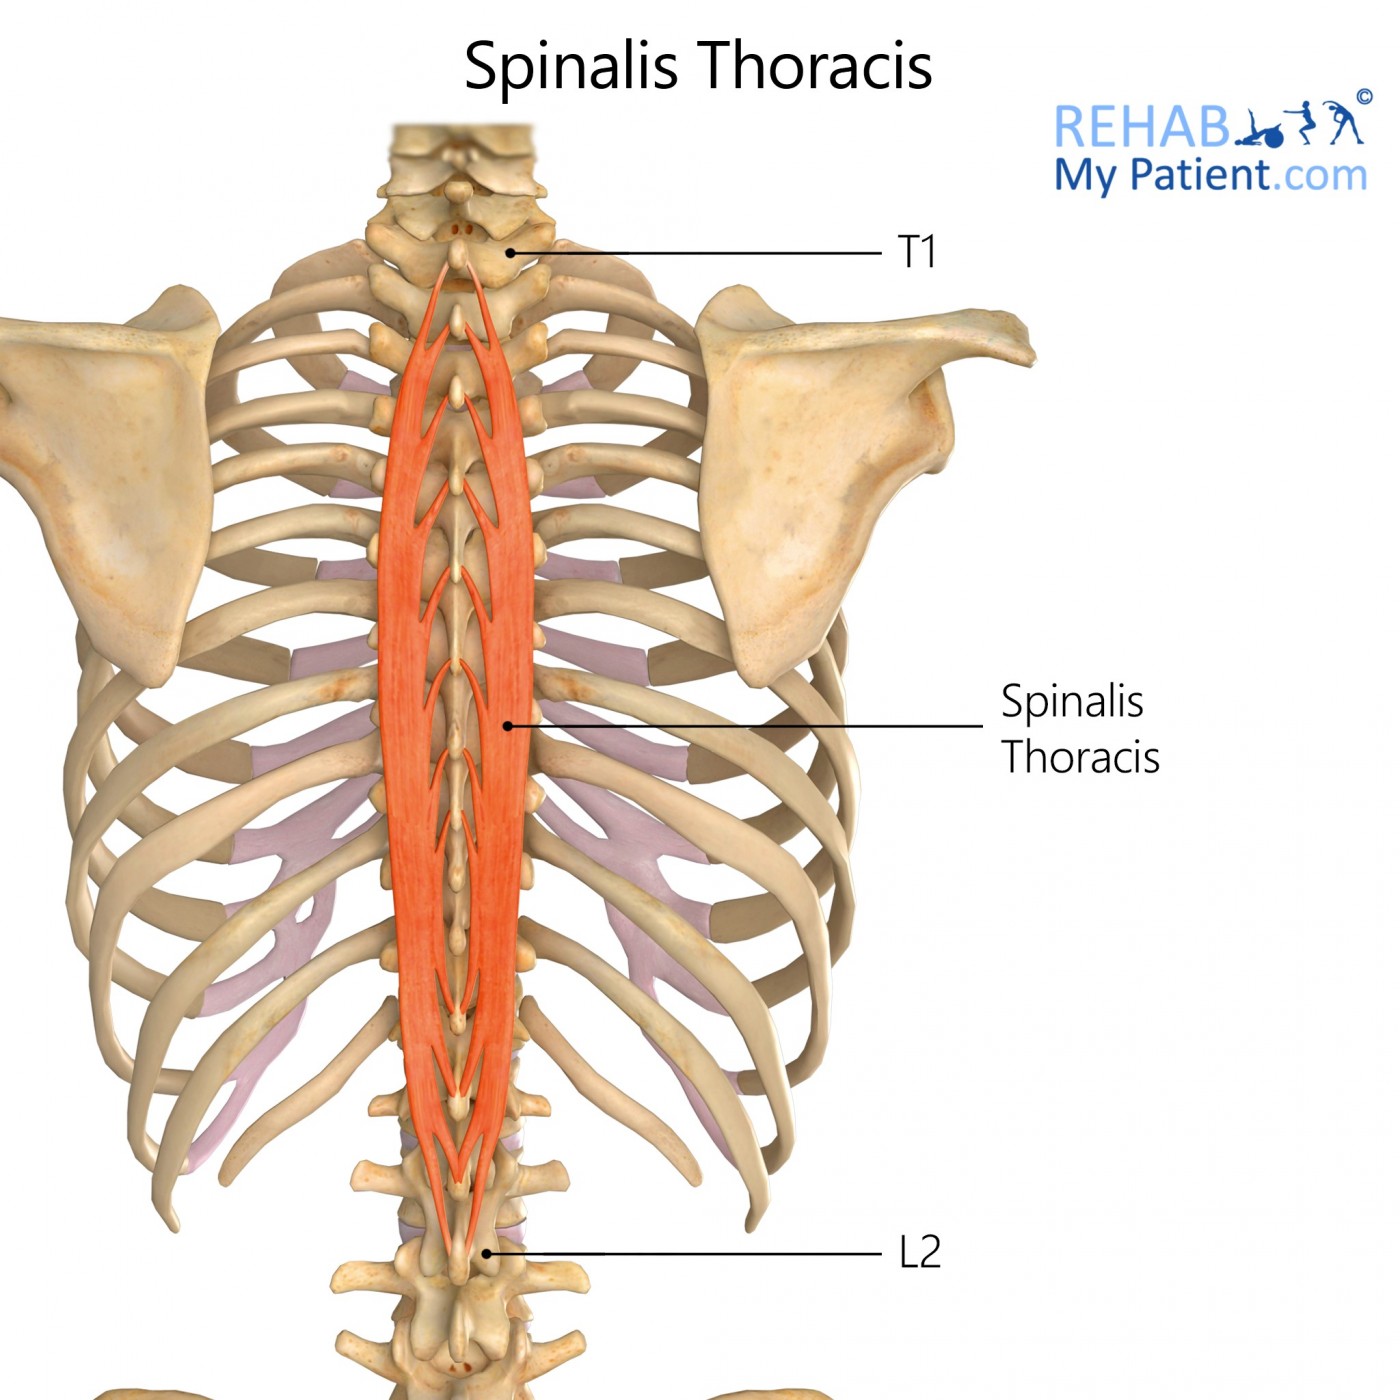 Spinalis Thoracis